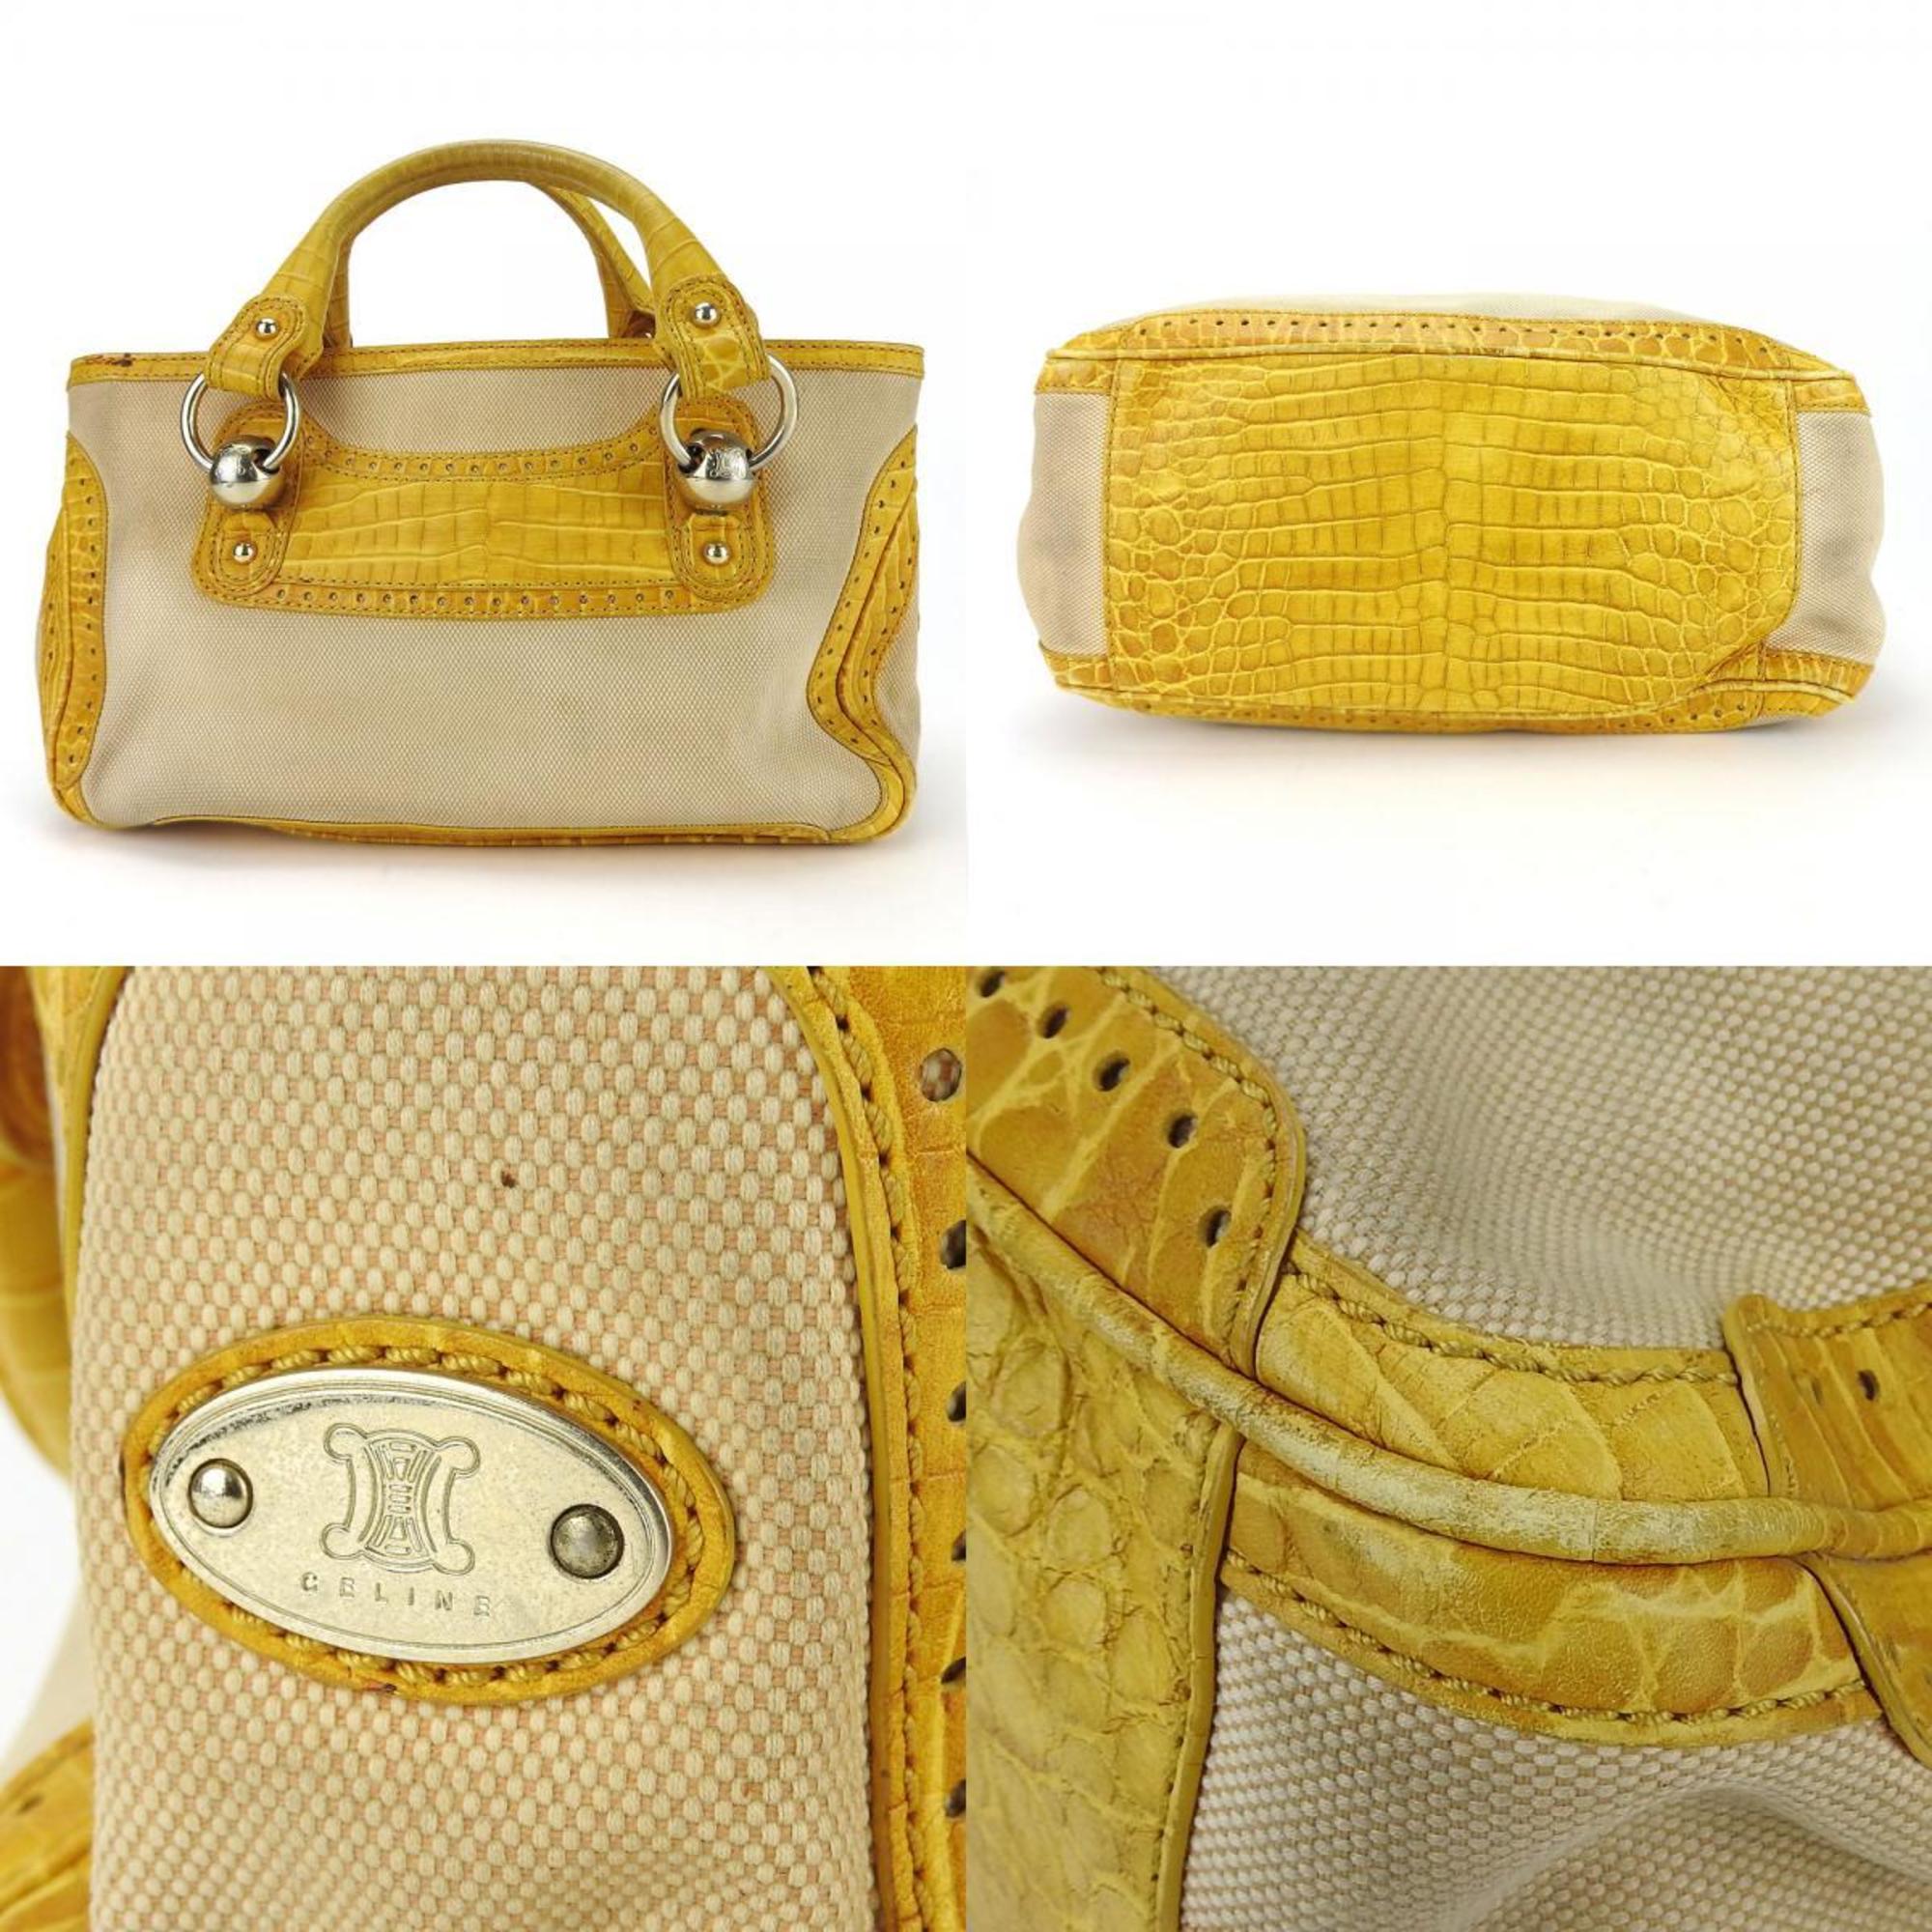 Celine handbag Boogie bag canvas leather yellow beige embossed women's CELINE